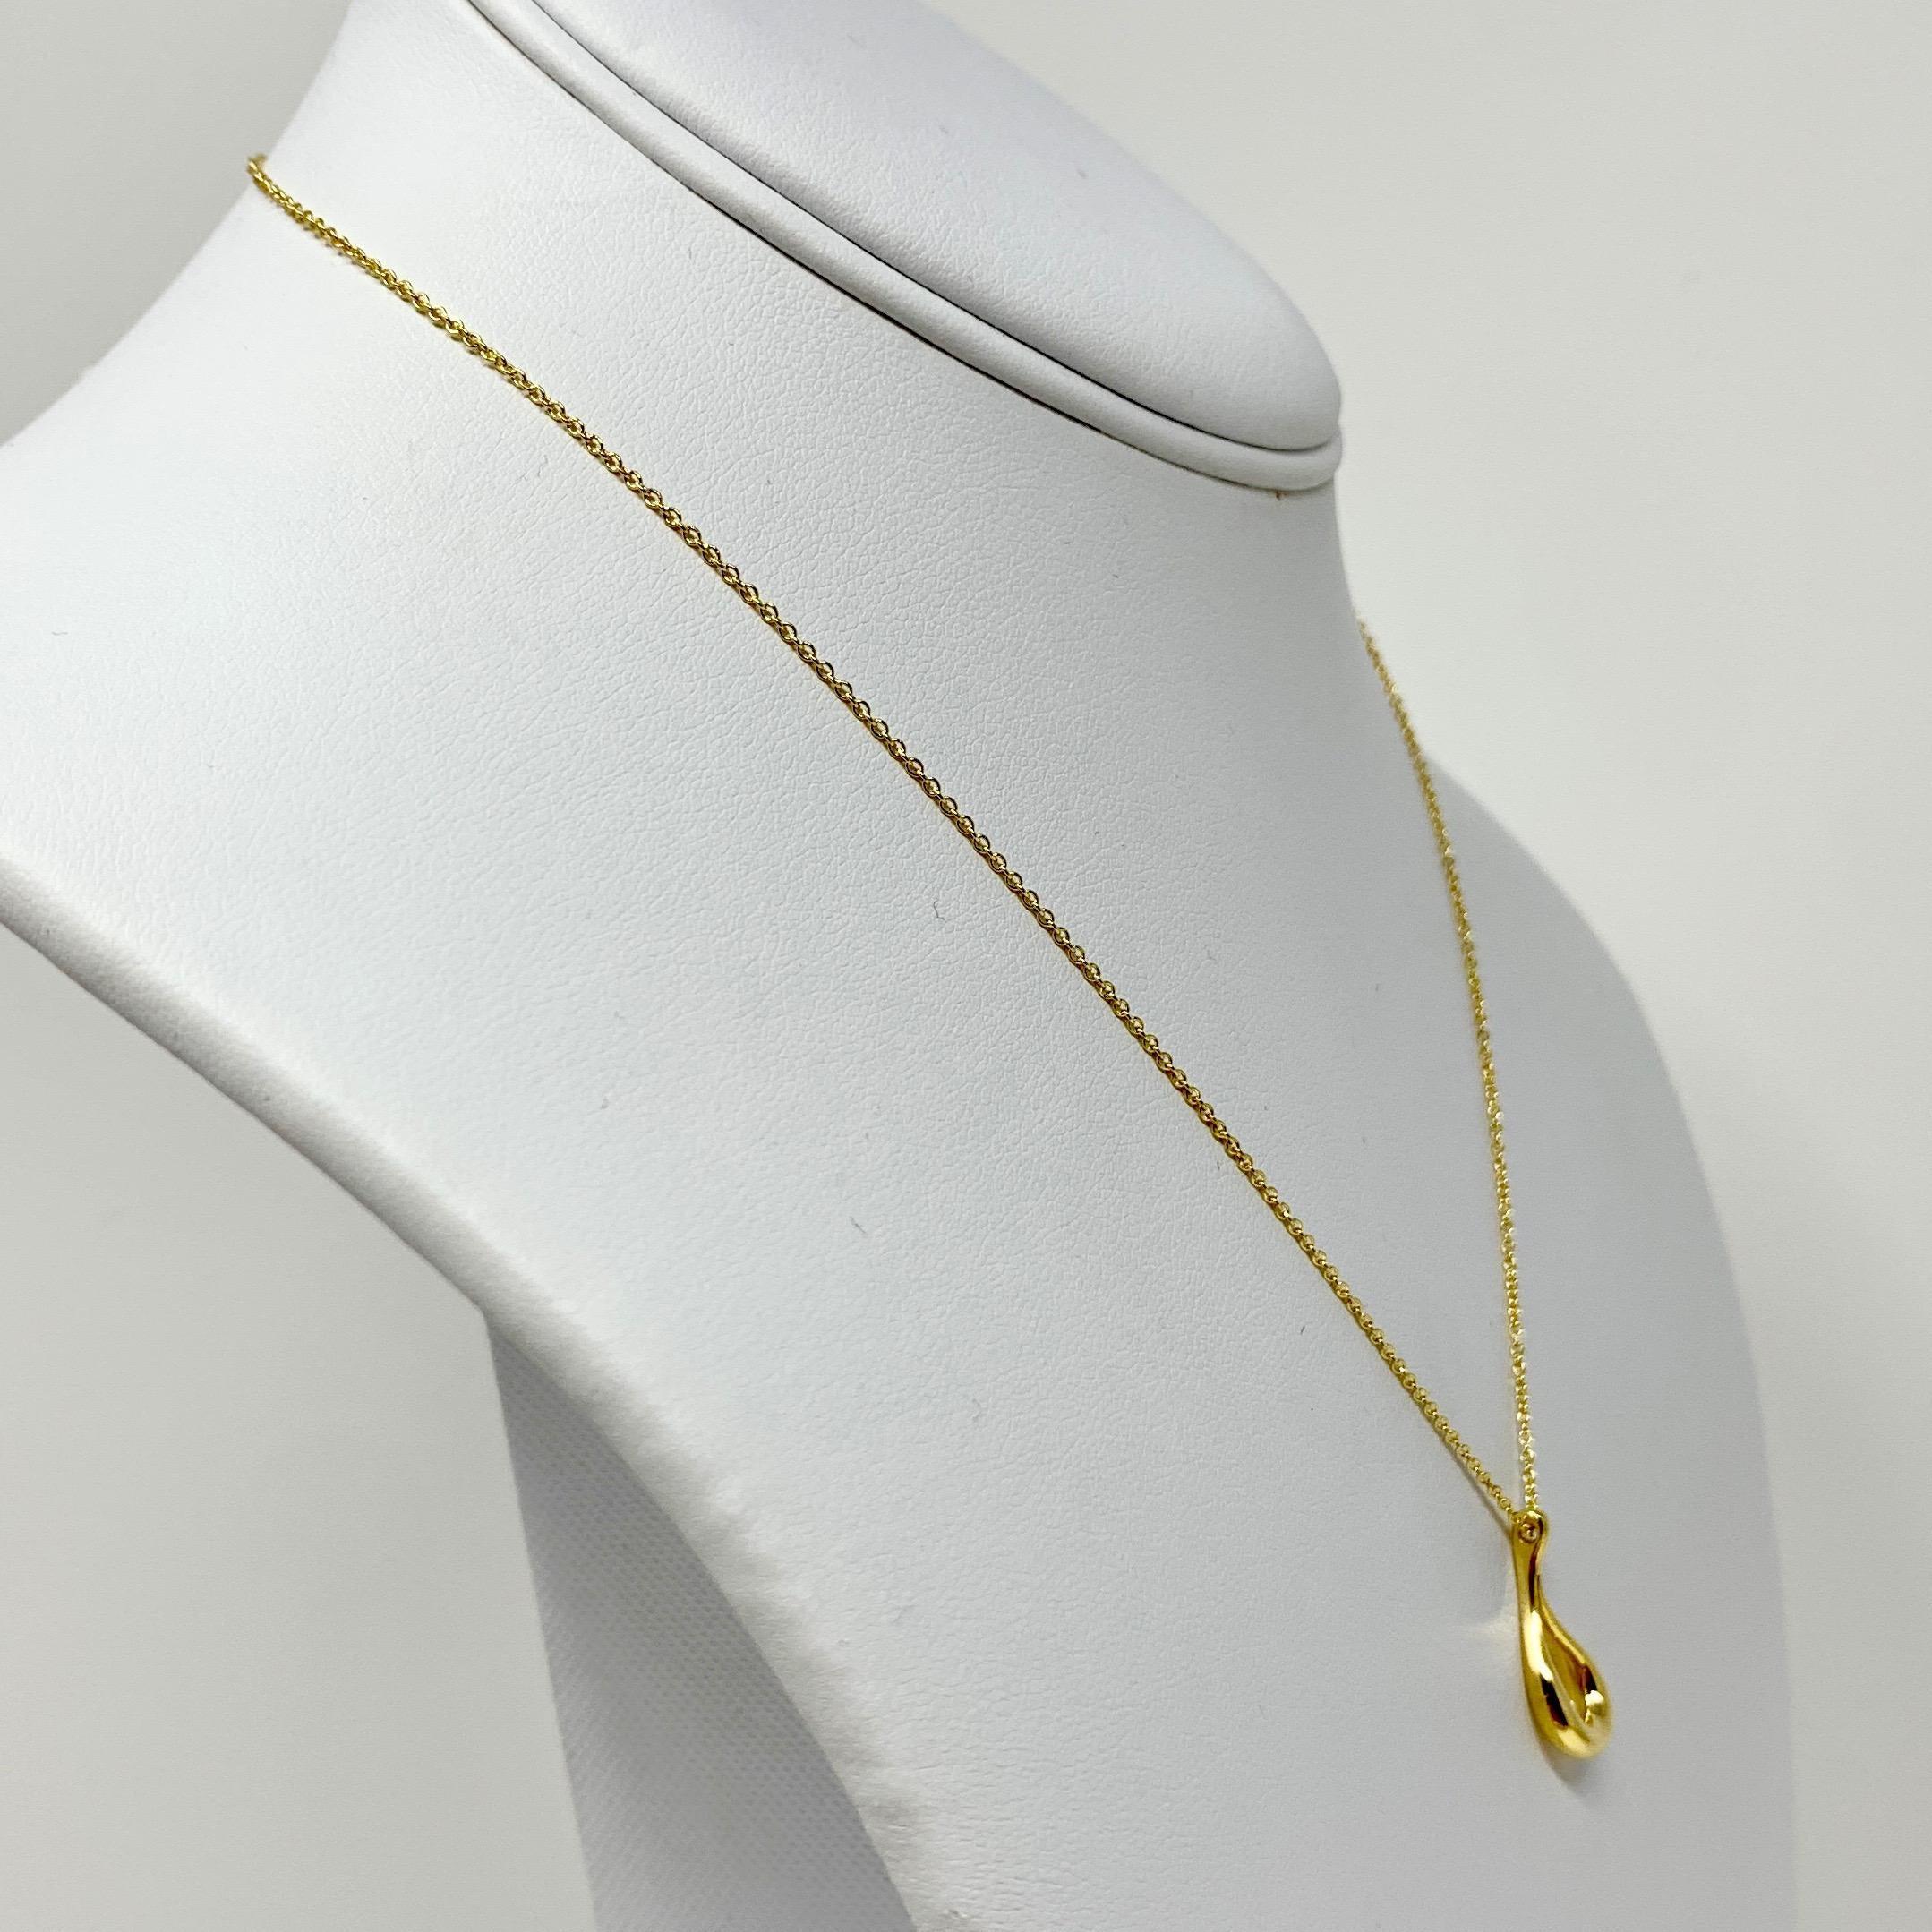 Tiffany & Co. Elsa Peretti 18k Yellow Gold Open Tear Drop Pendant Necklace 16